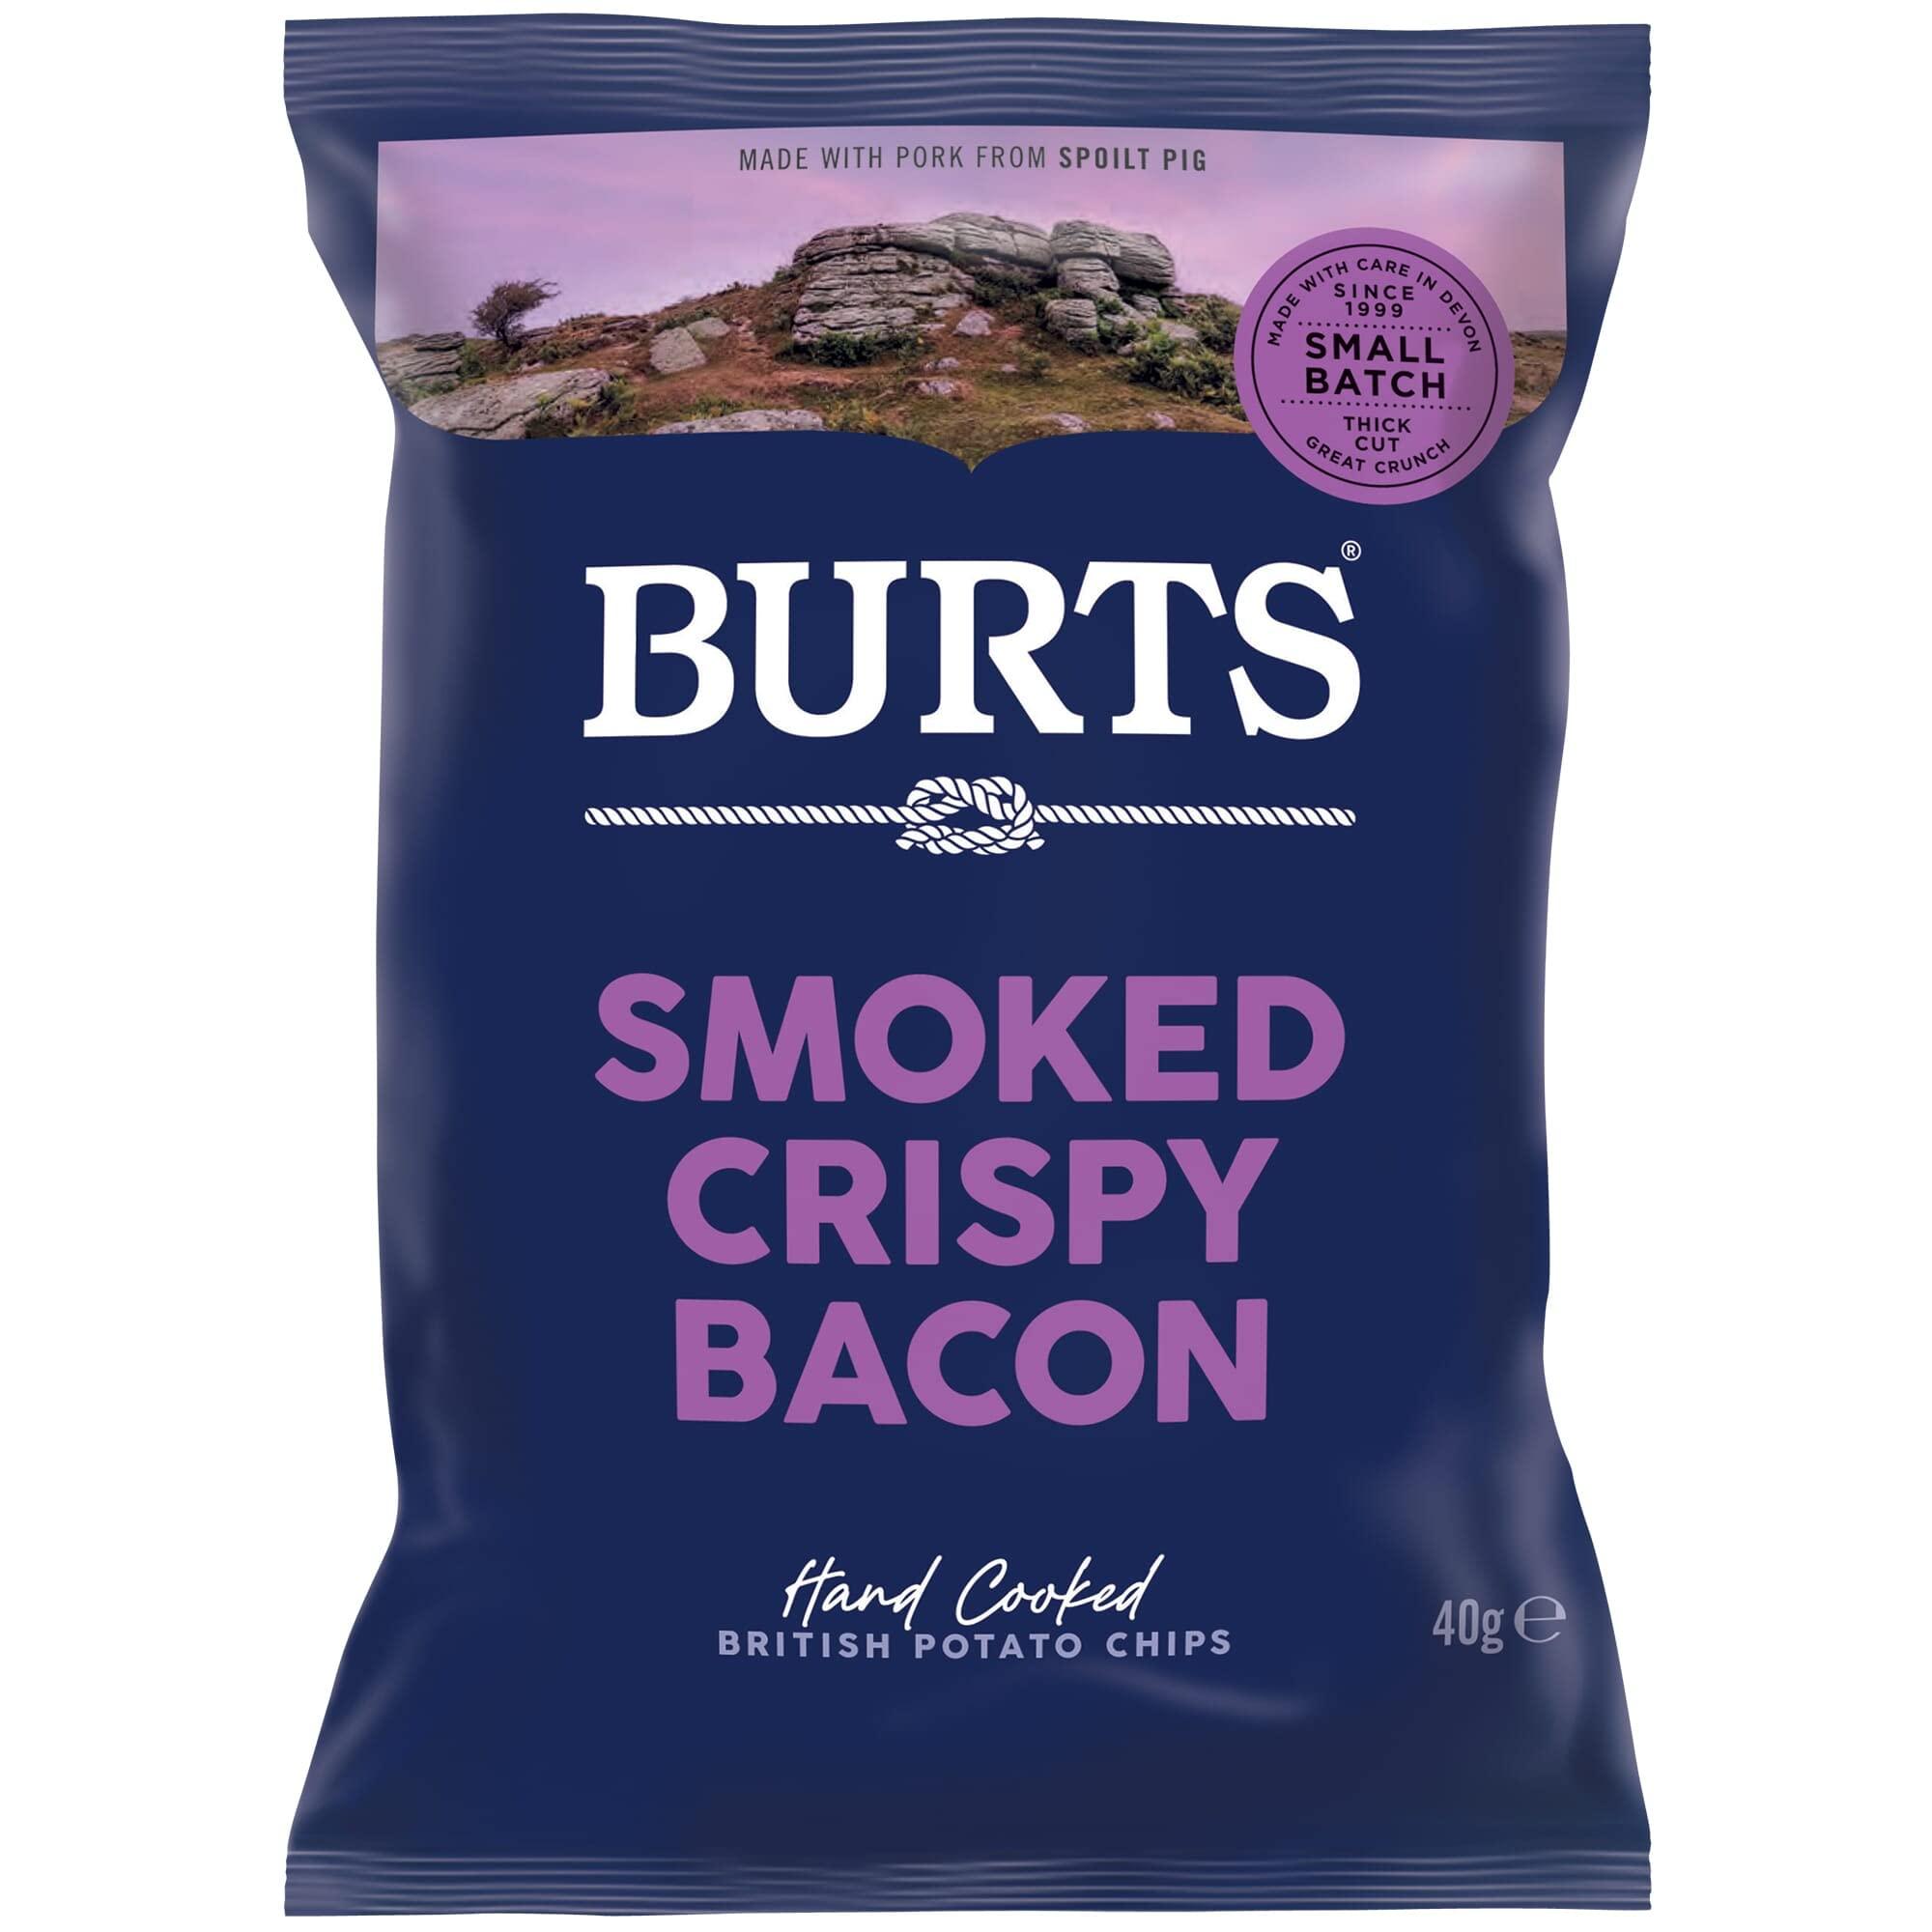 Burts Smoked Crispy Bacon Crisps 40g (20 Pack) - Vending Superstore